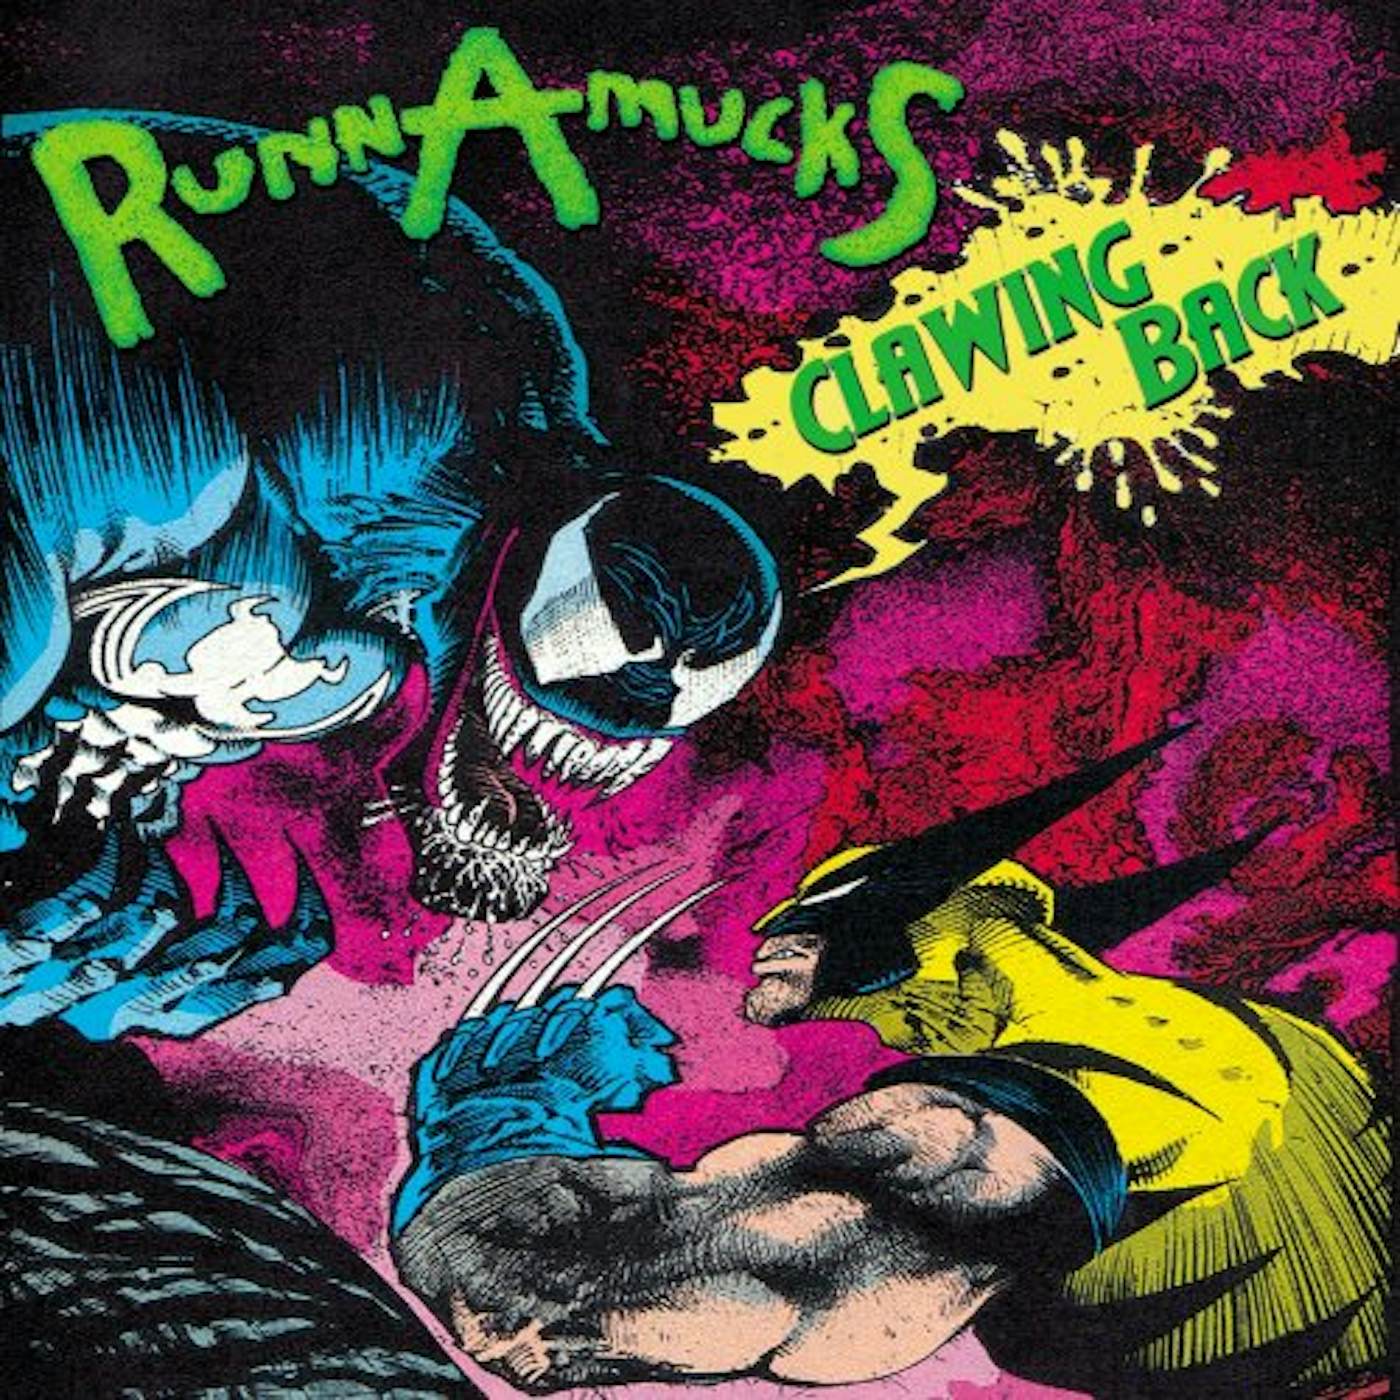 RunnAmuckS Clawing Back Vinyl Record